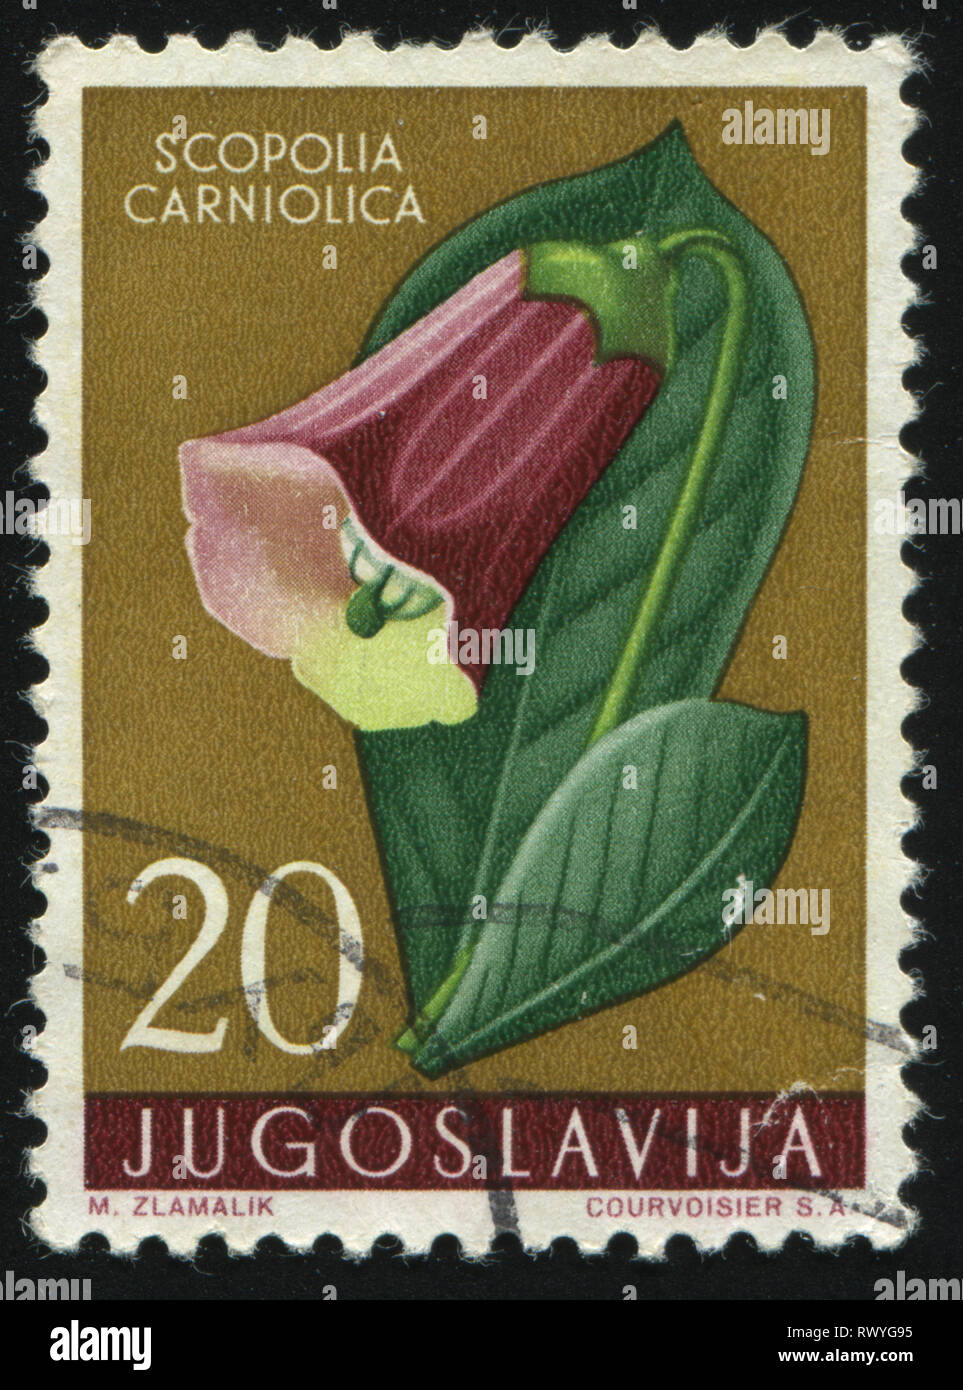 RUSSIA KALININGRAD, 12 NOVEMBER 2016: stamp printed by Yugoslavia, shows Scopolia, circa 1959 Stock Photo